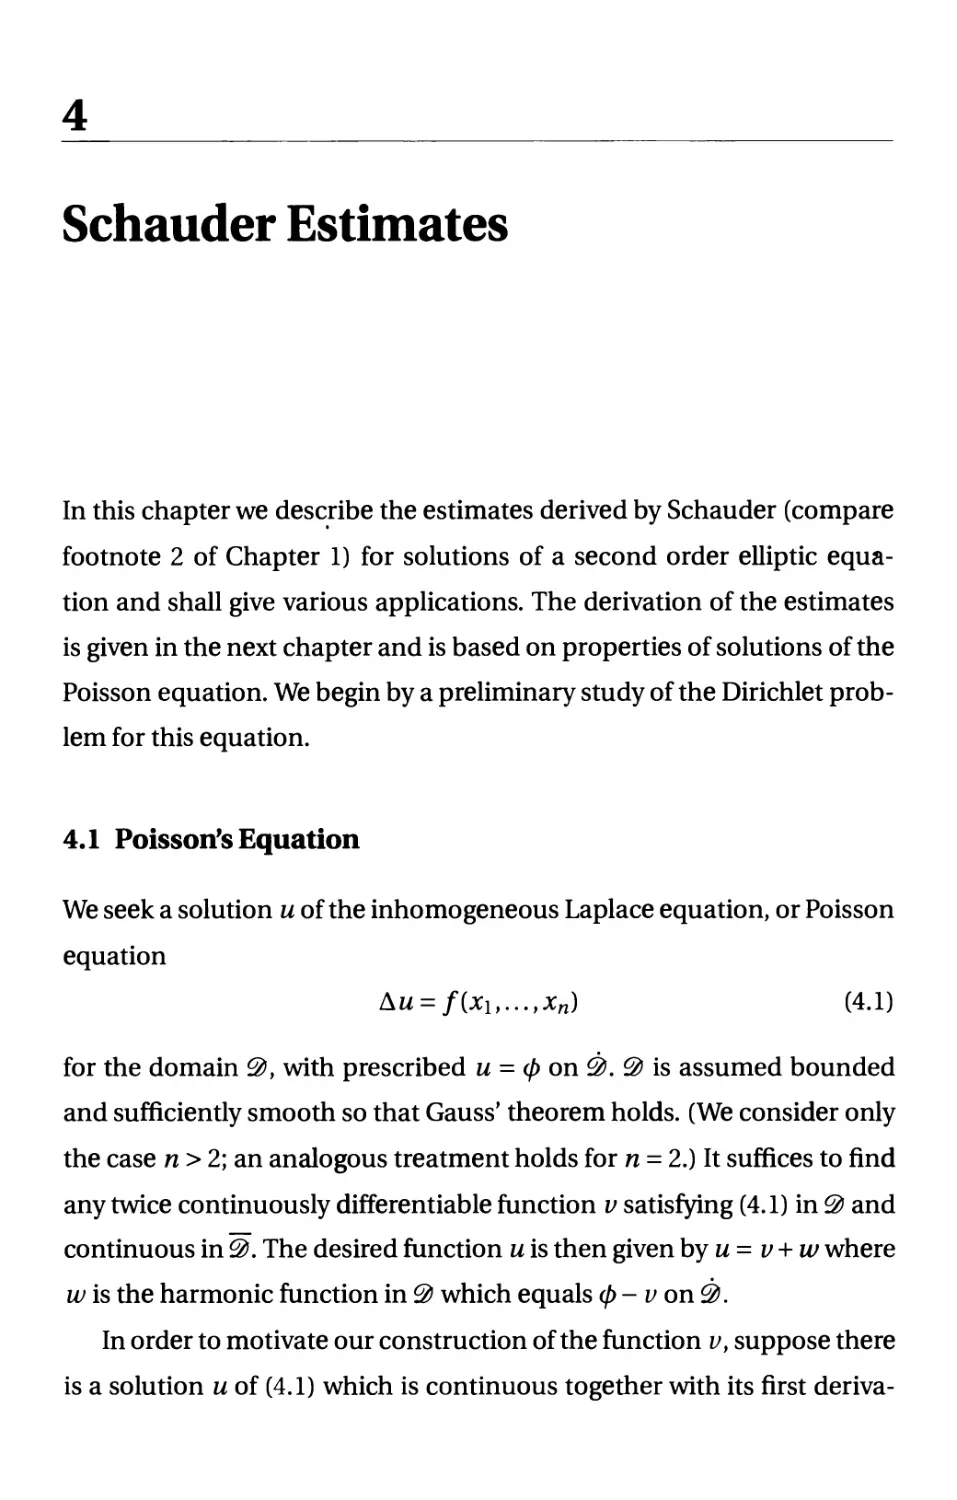 4. Schauder Estimates
4.1 Poisson's Equation